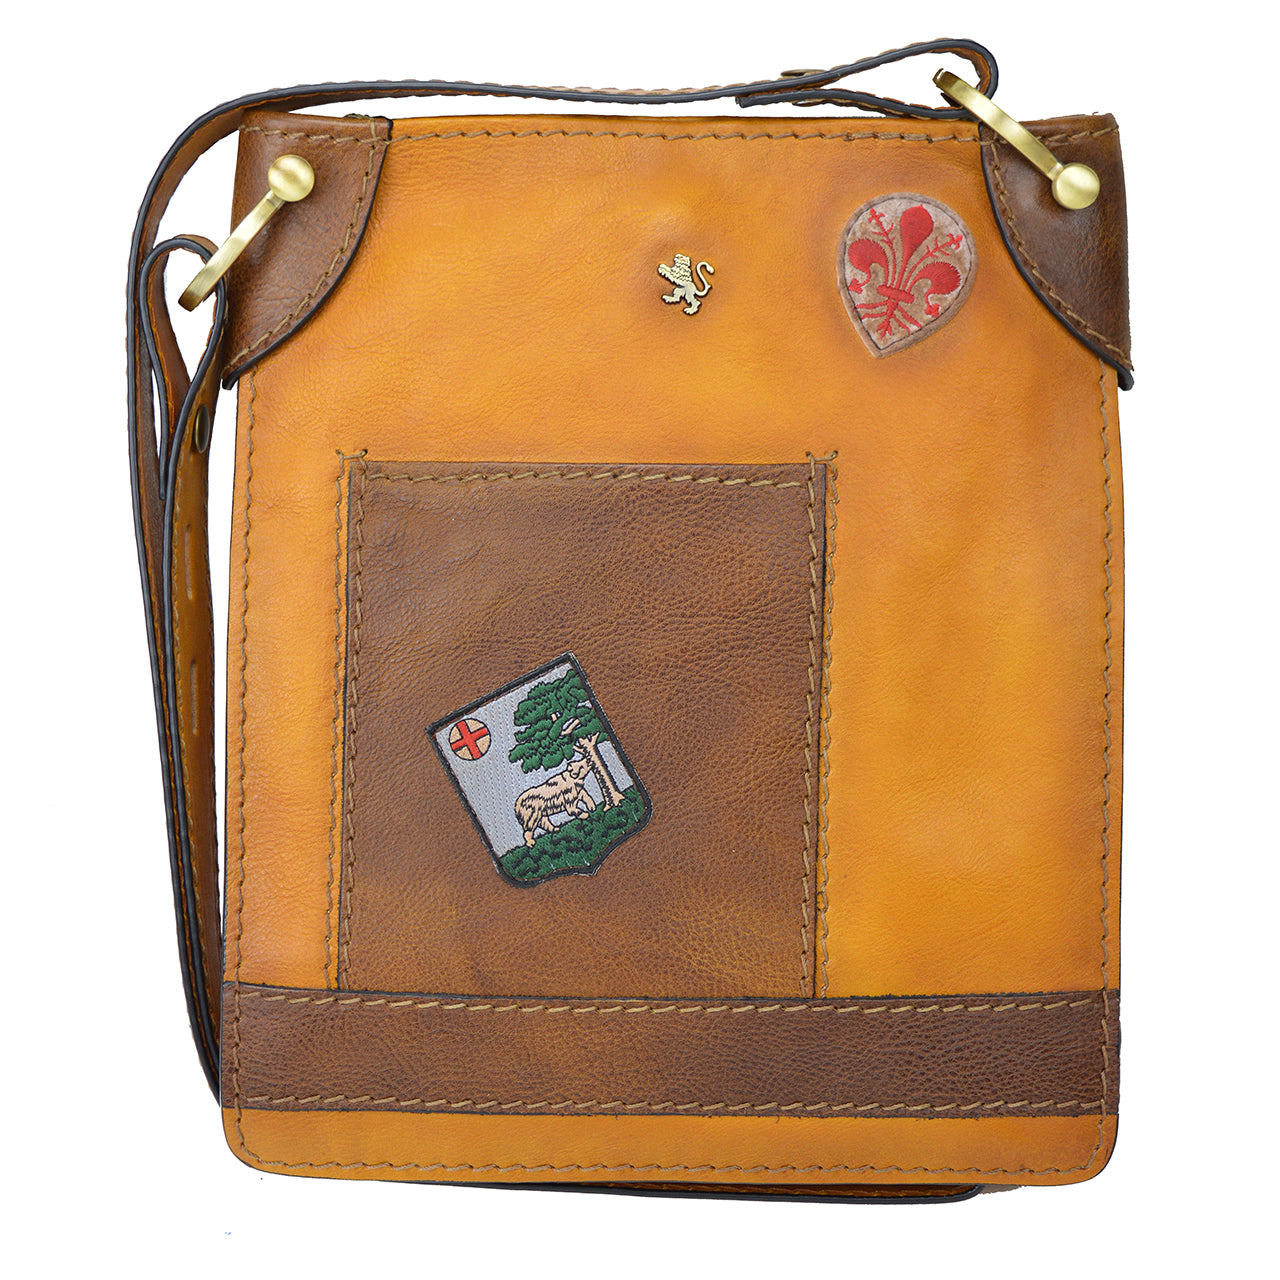 Pratesi Bakem Medium Bag in genuine Italian leather - Vegetable Tanned Italian Leather Cognac